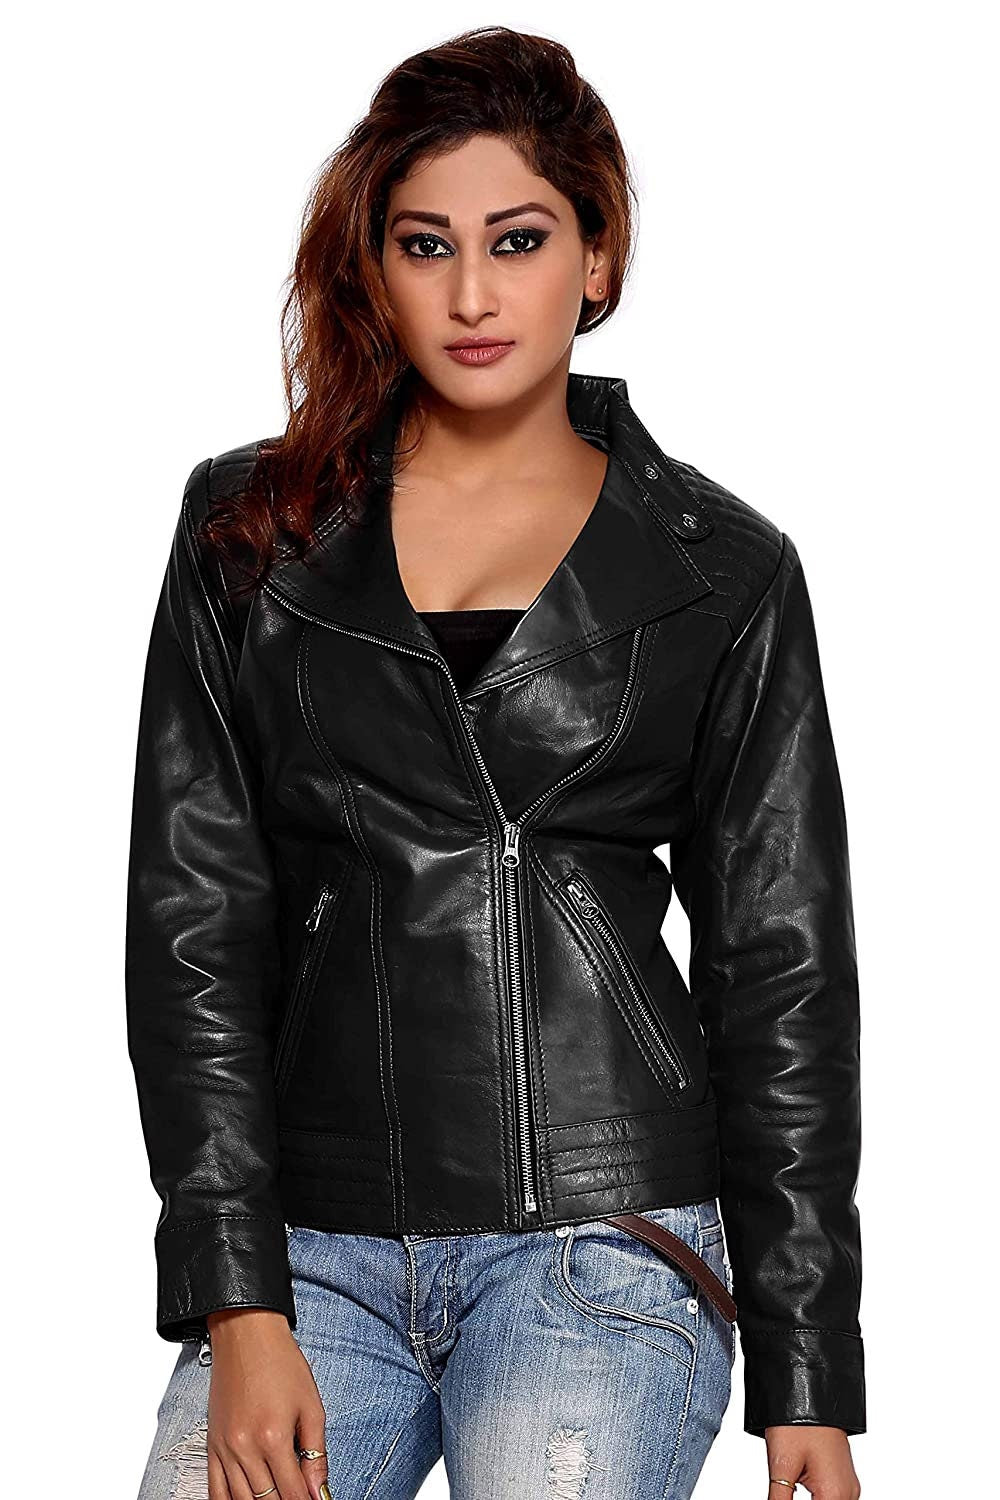 LINDSEY STREET Genuine Leather Jacket for Women Slim Fit Leather Jacket Biker Jacket